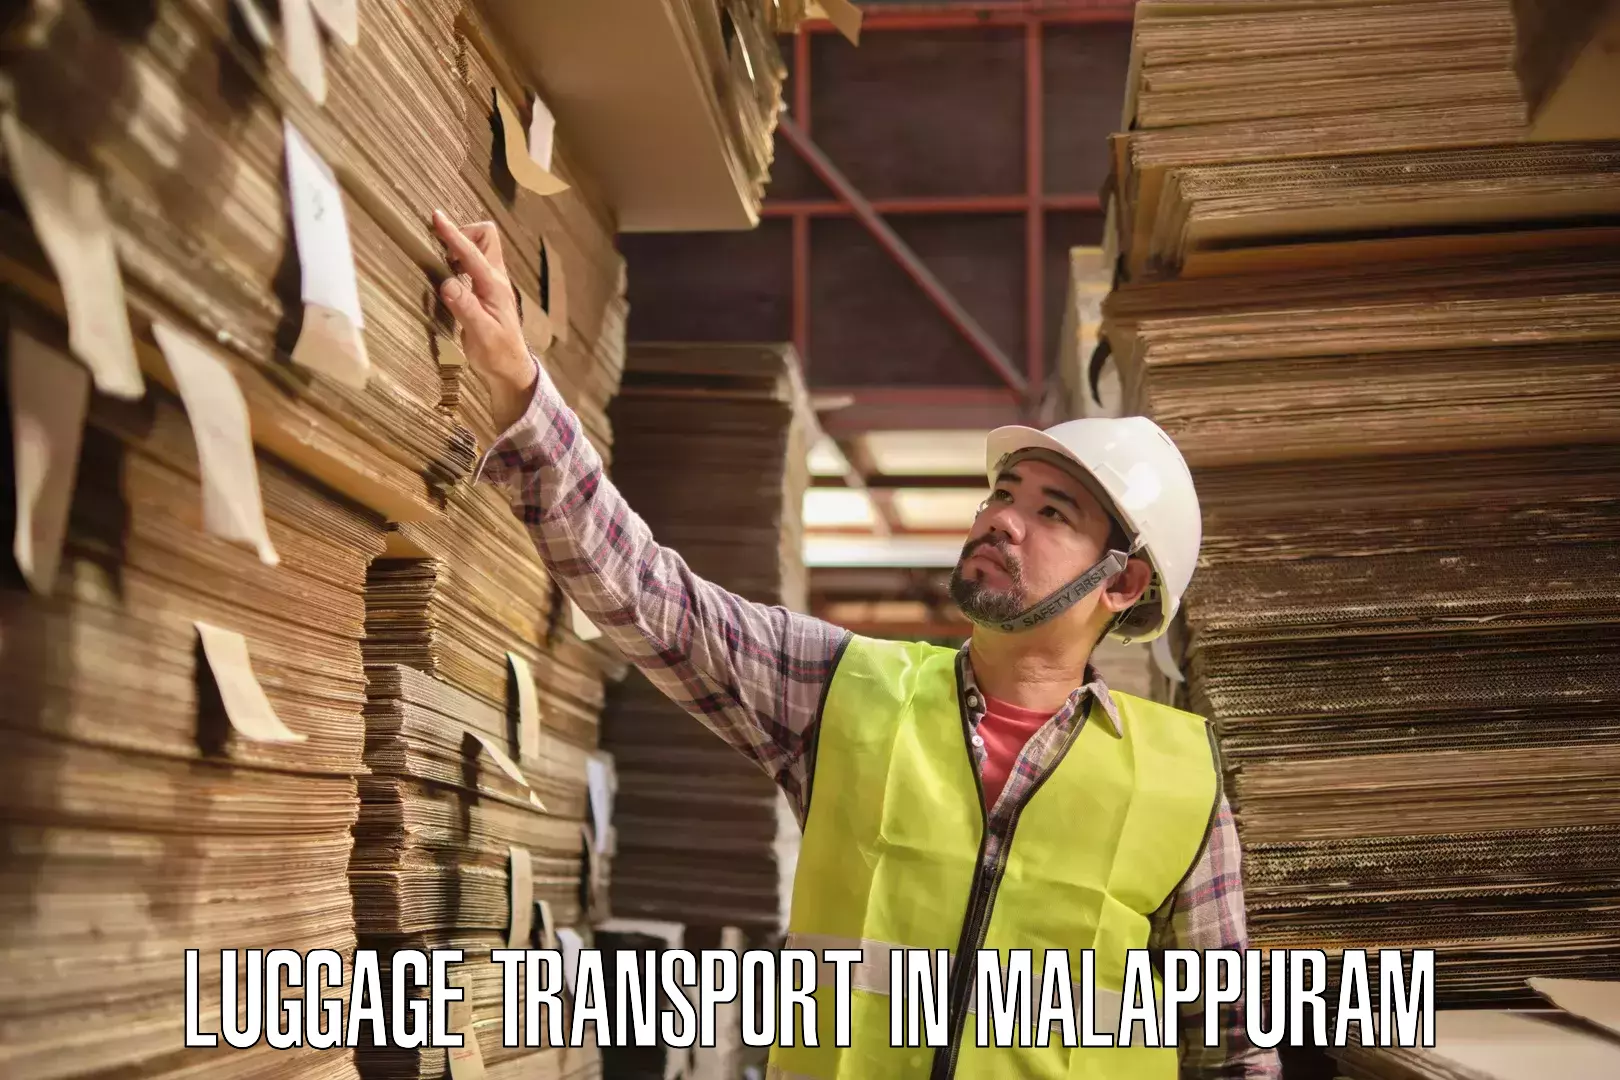 Regional luggage transport in Malappuram